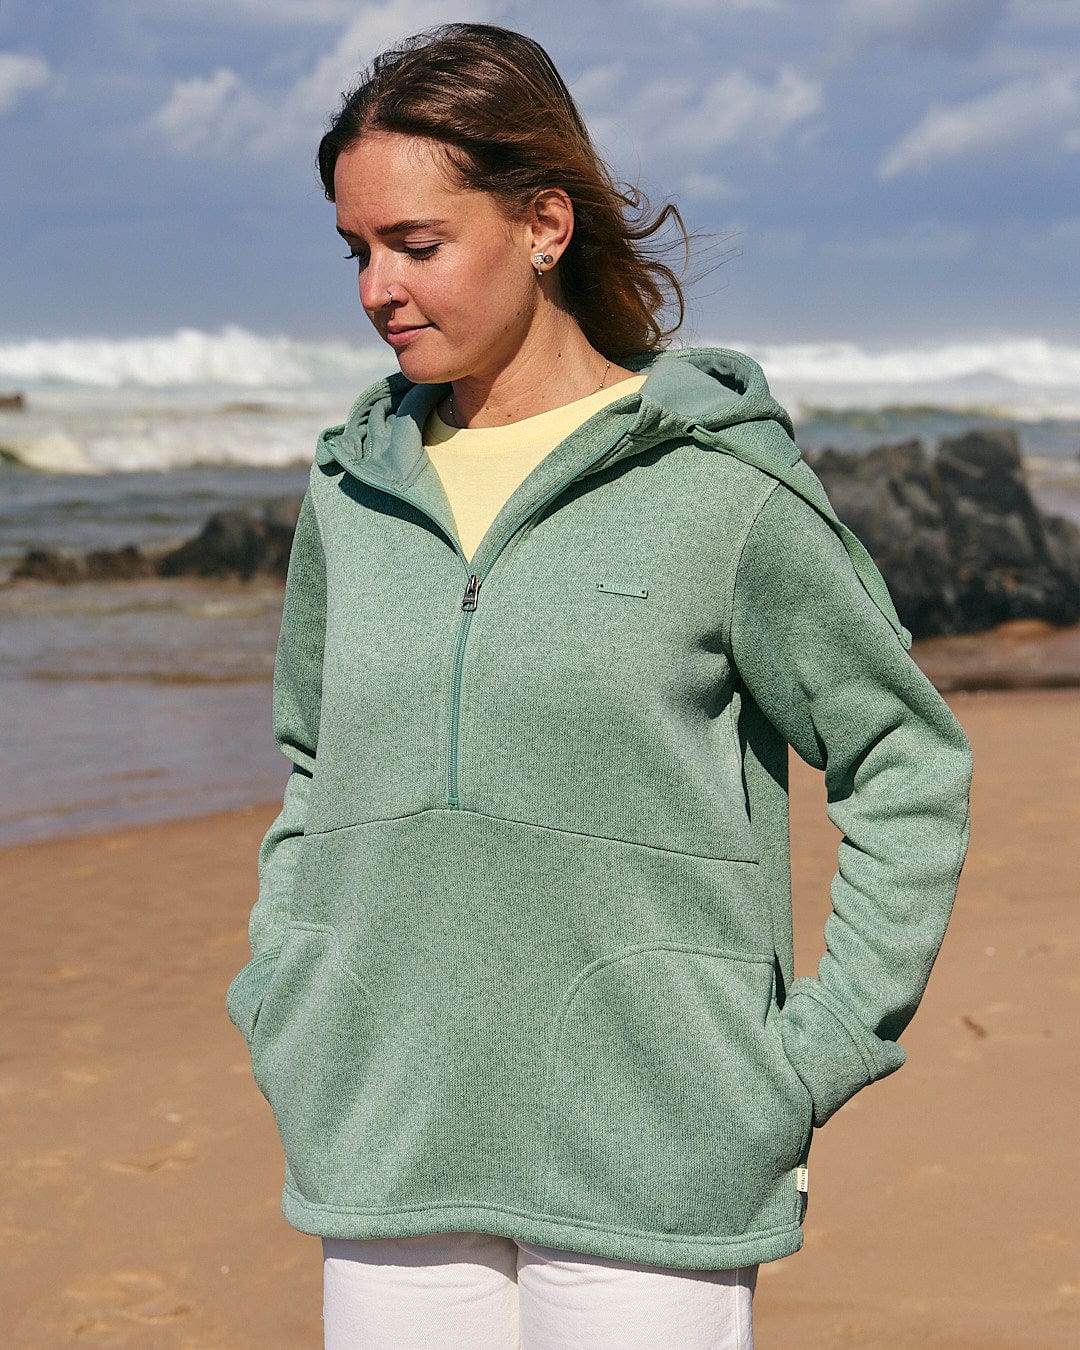 A woman standing on a beach wearing a Saltrock Galaksea - Womens 1/4 Zip Fleece - Light Green hoodie.